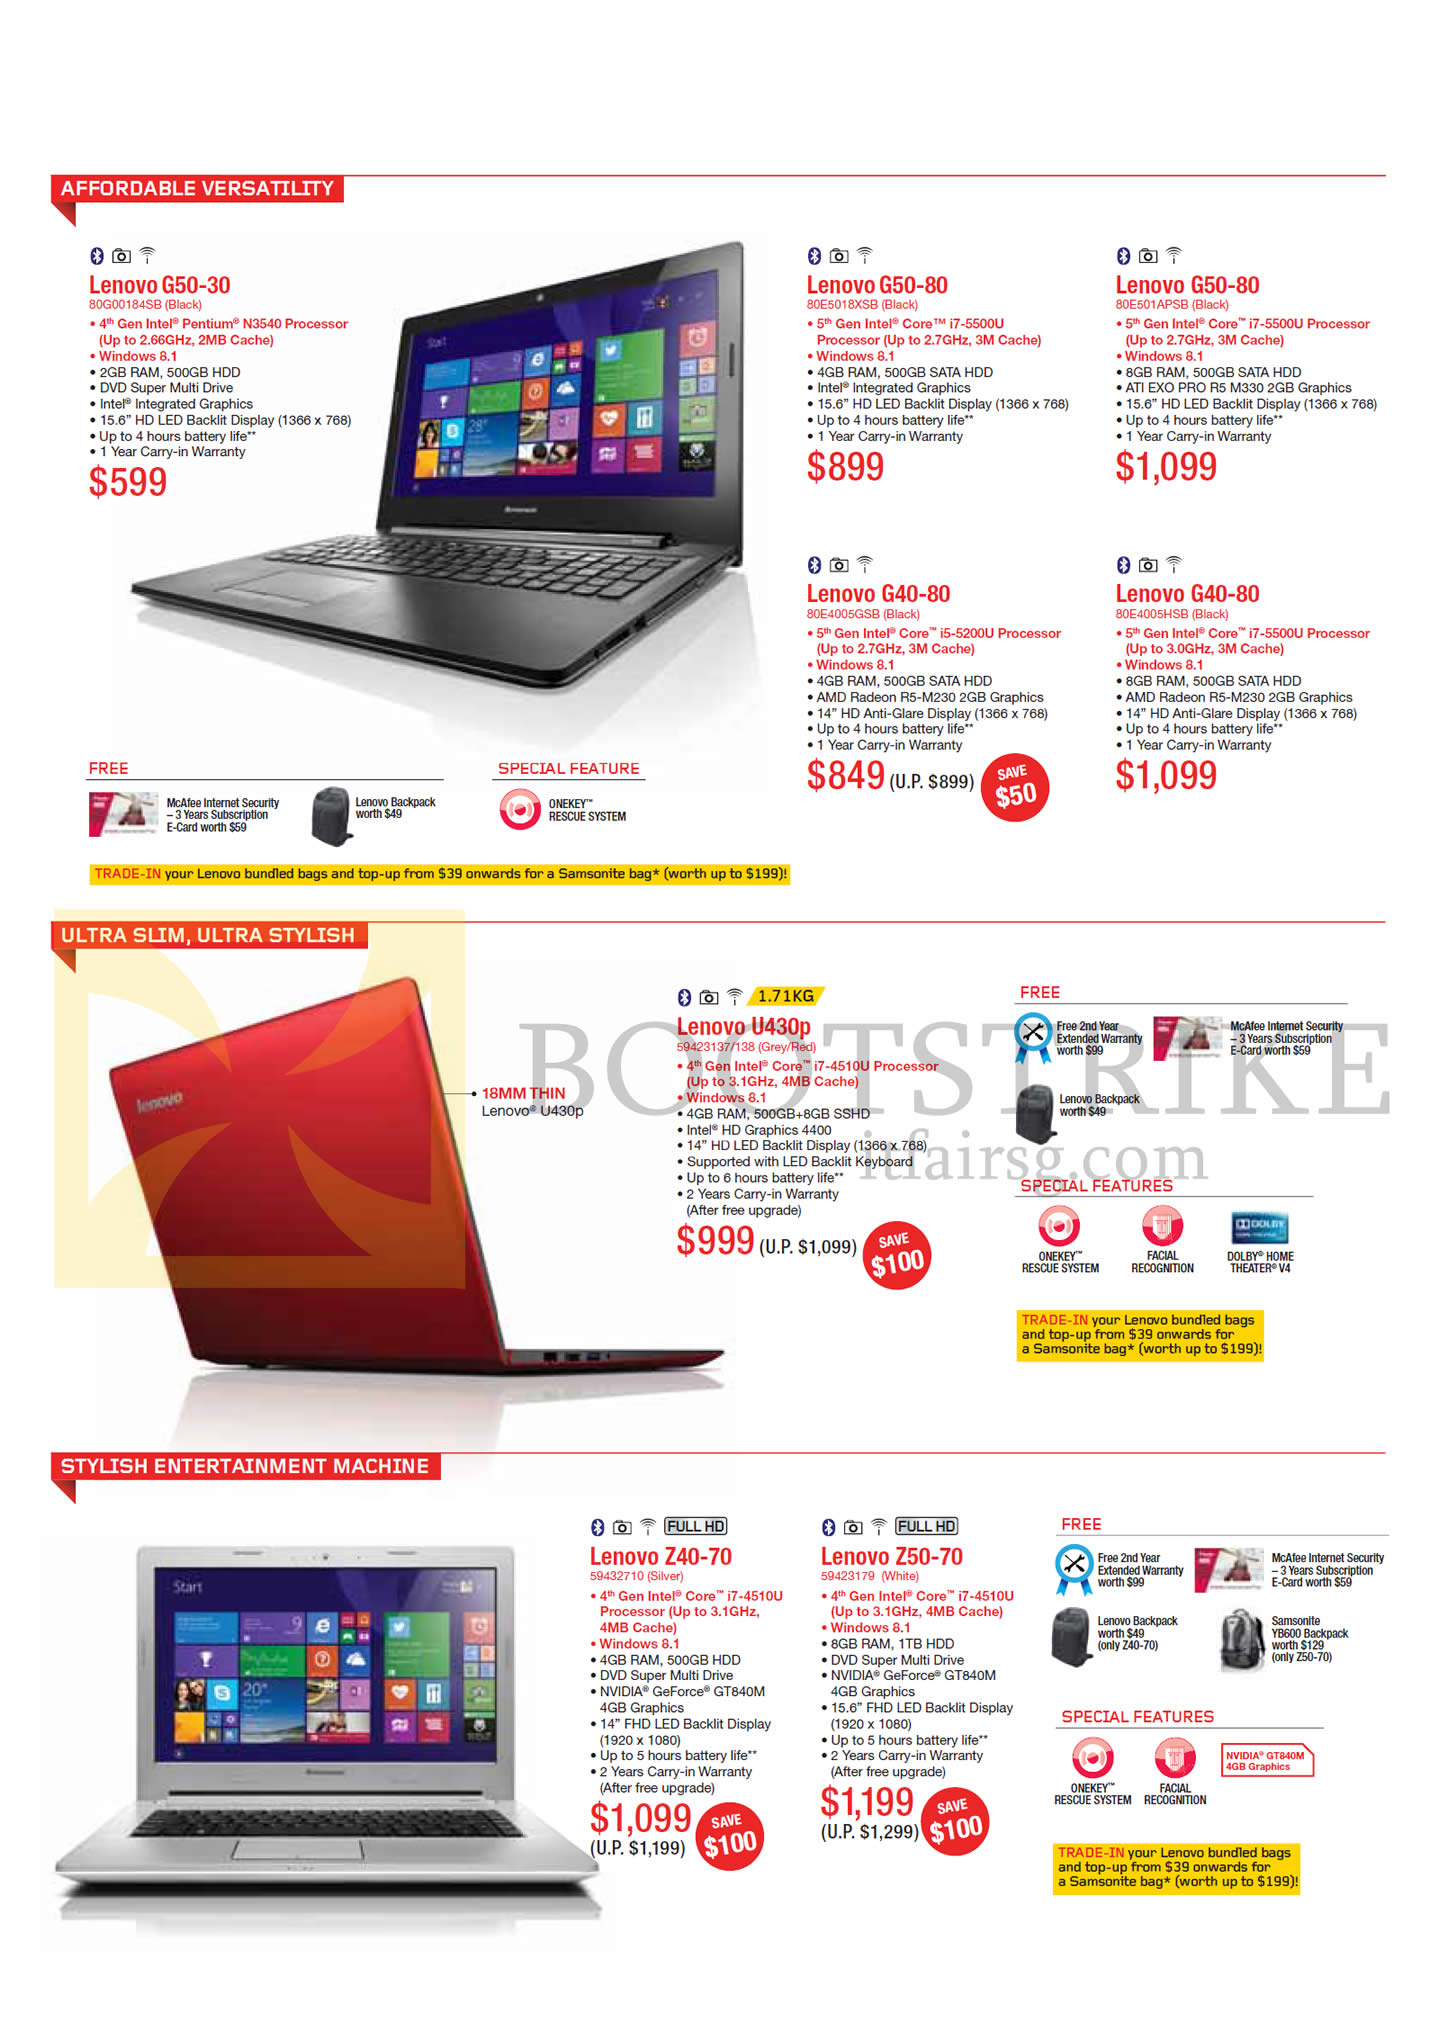 IT SHOW 2015 price list image brochure of Lenovo Notebooks G50-30, G50-80, G40-80, U430p, Z40-70, Z50-70